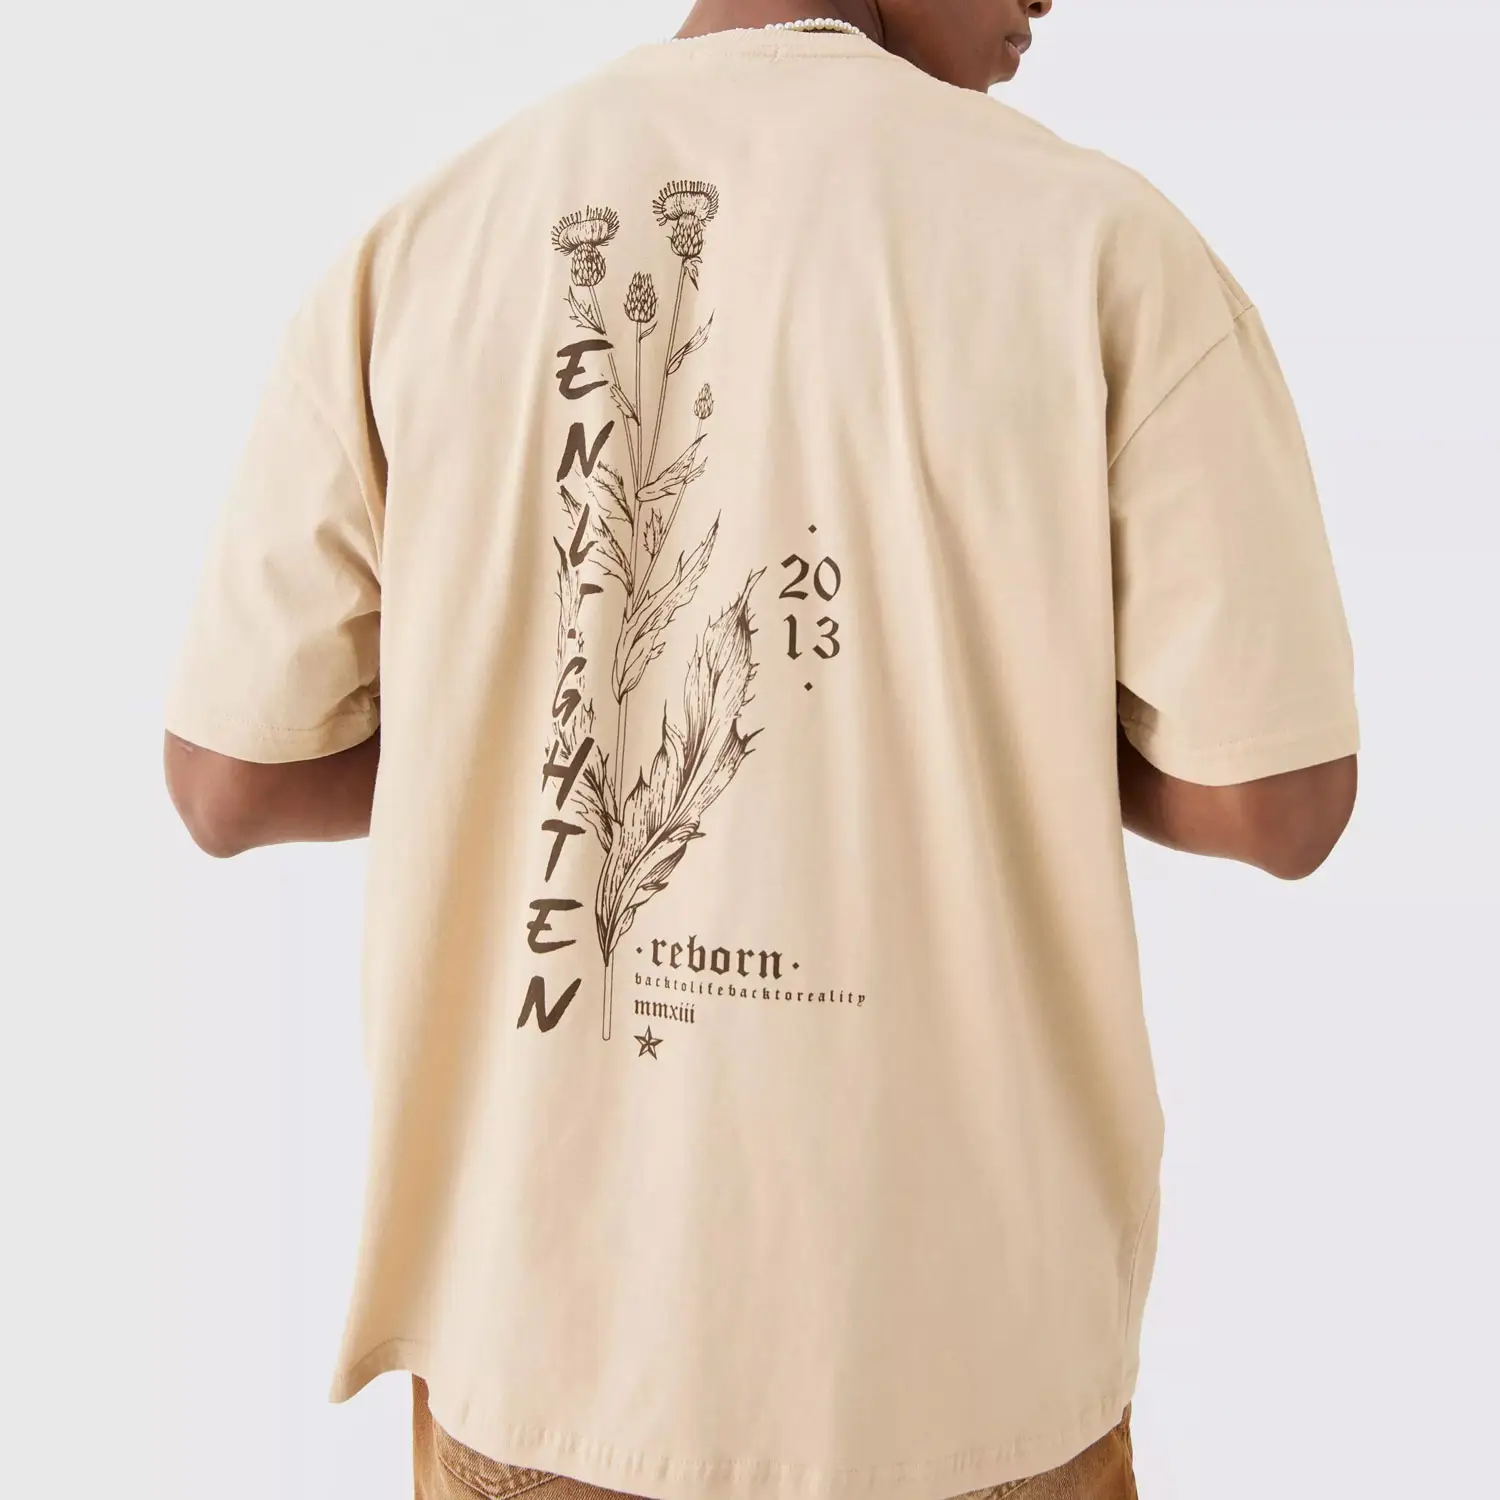 Oversized Boxy Verlengde Hals Verlichtend Bedrukt T-Shirt | 100% Katoen | Model Is 6'1 "Trendy Urban Streetwear